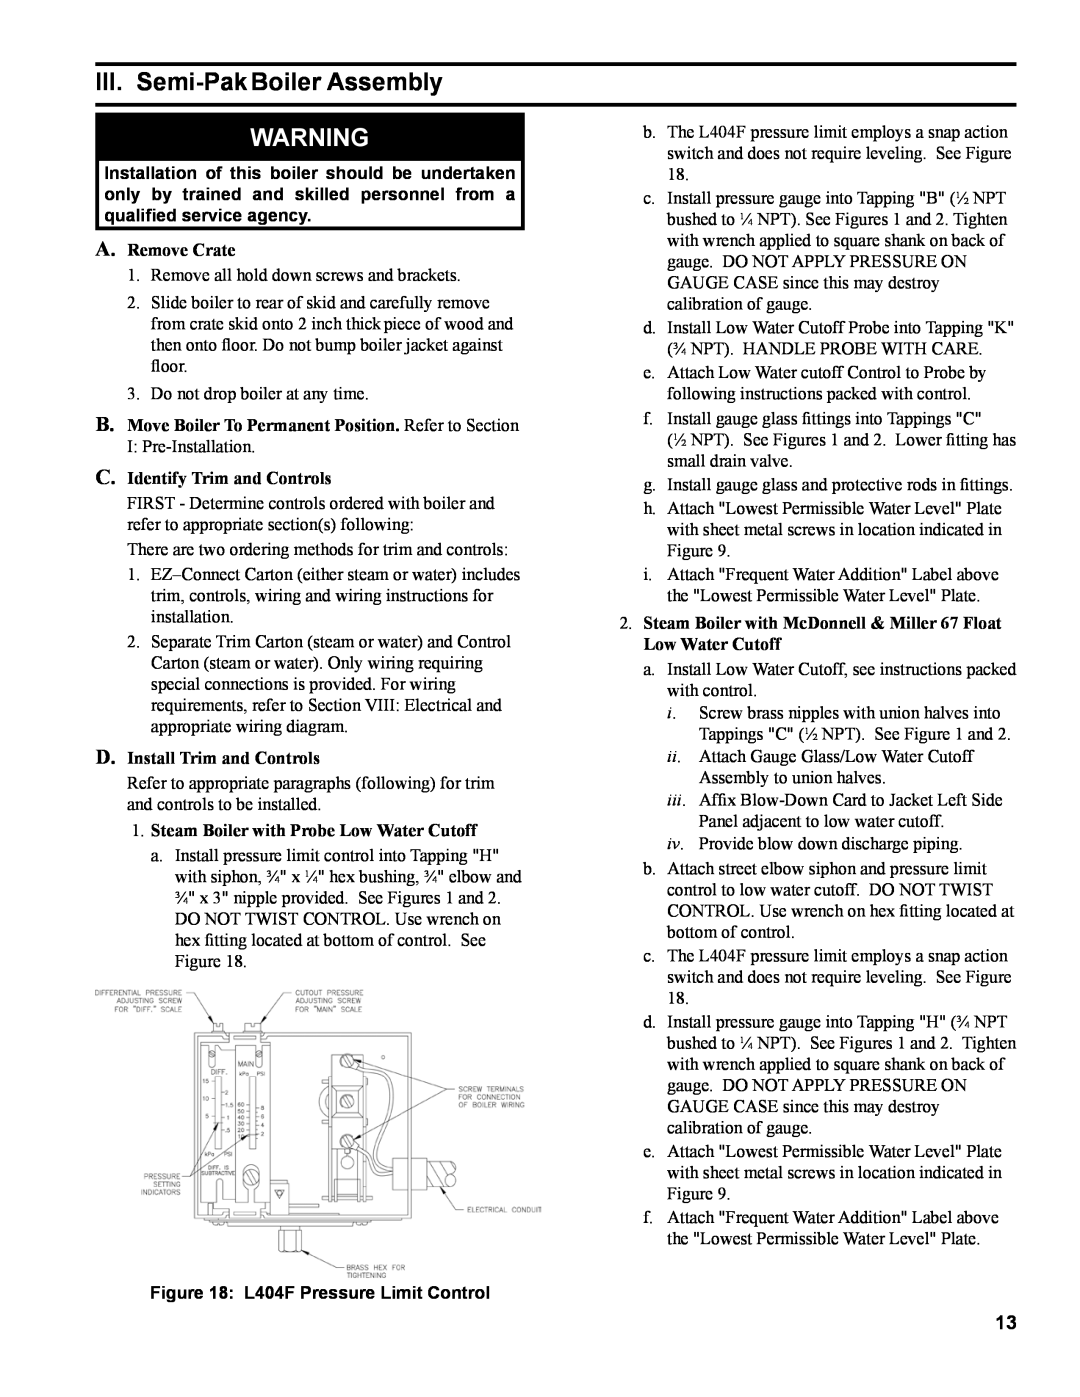 Burnham IN10 III. Semi-Pak Boiler Assembly, A. Remove Crate, C. Identify Trim and Controls, D. Install Trim and Controls 